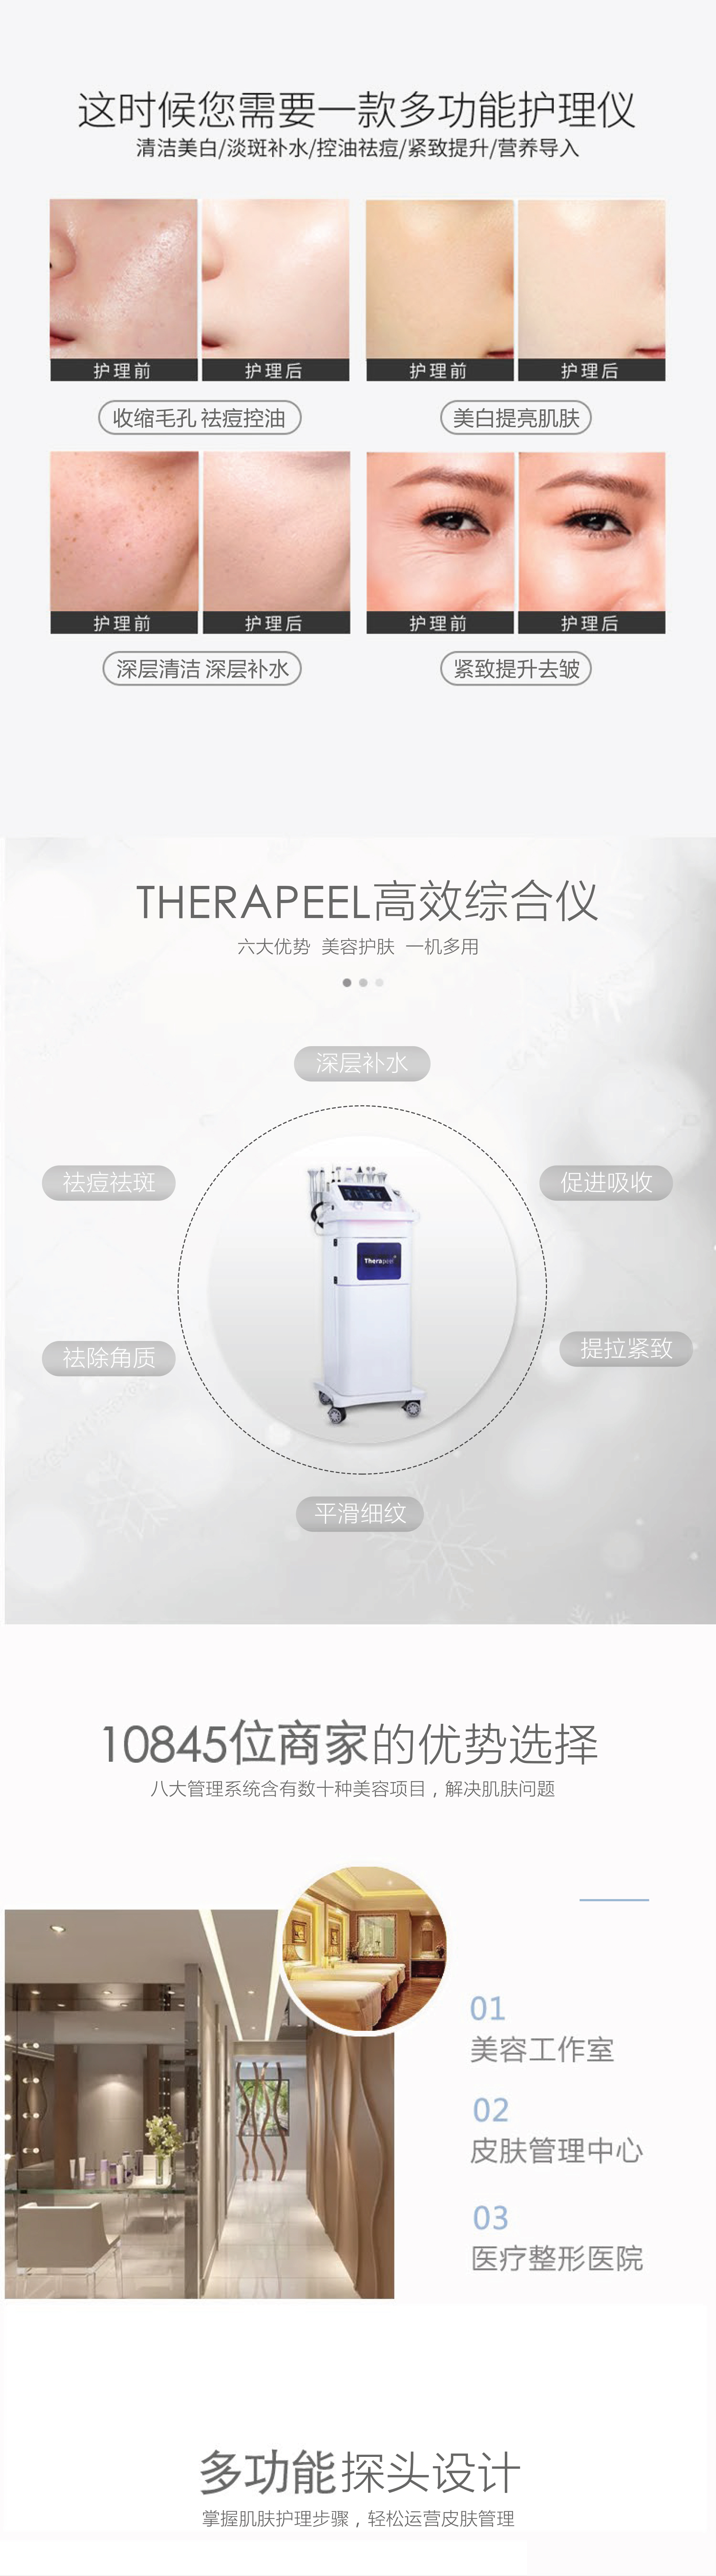 Synthétiseur haute efficacité Therapeel Xiu Muning : -2